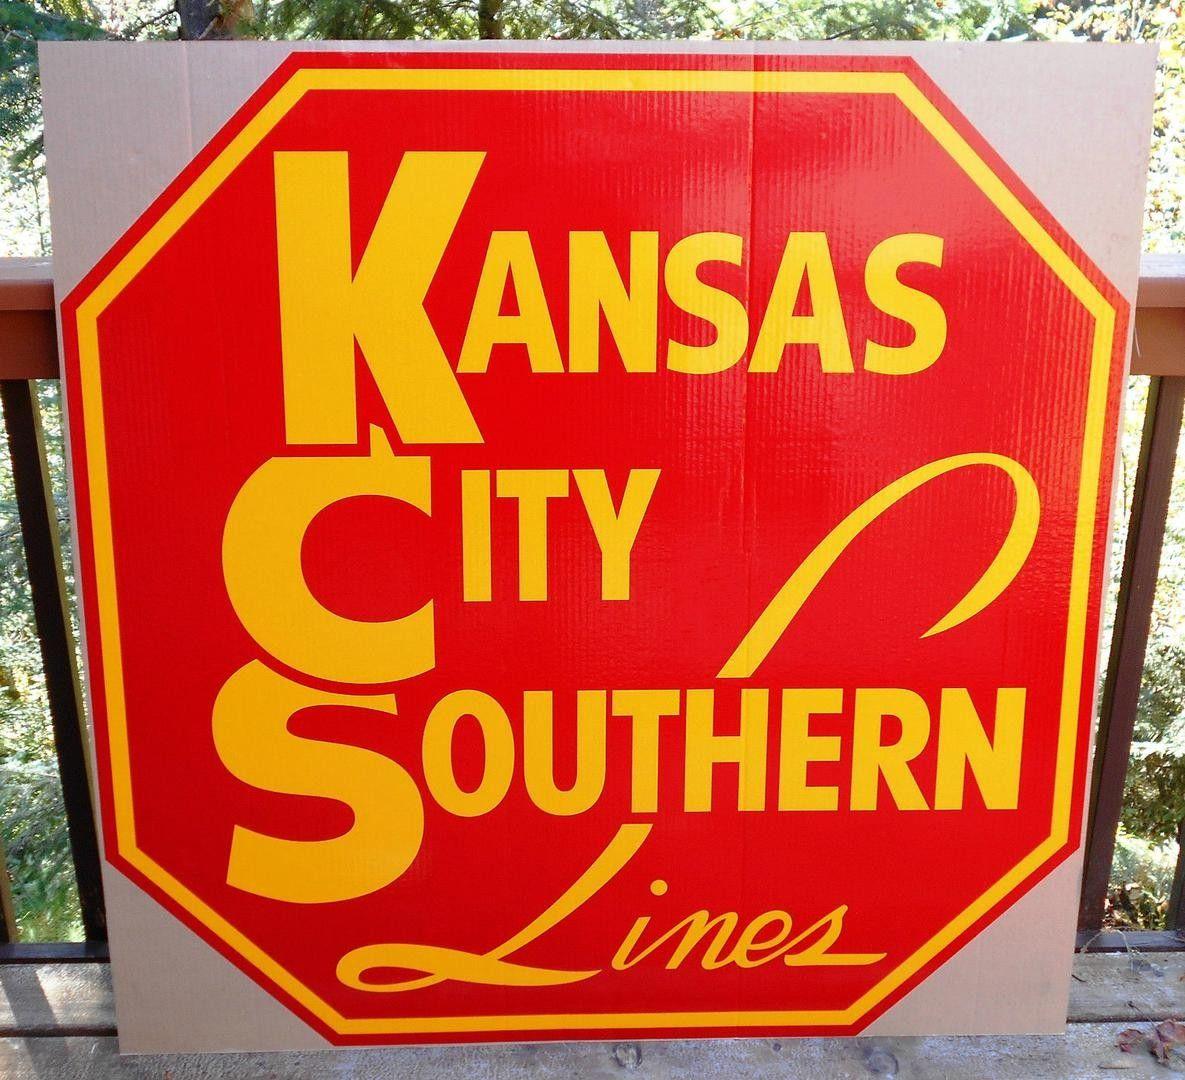 Knasas City Southern Logo - KCS Logo Railcar Decal - Kansas City Southern | #1925052772